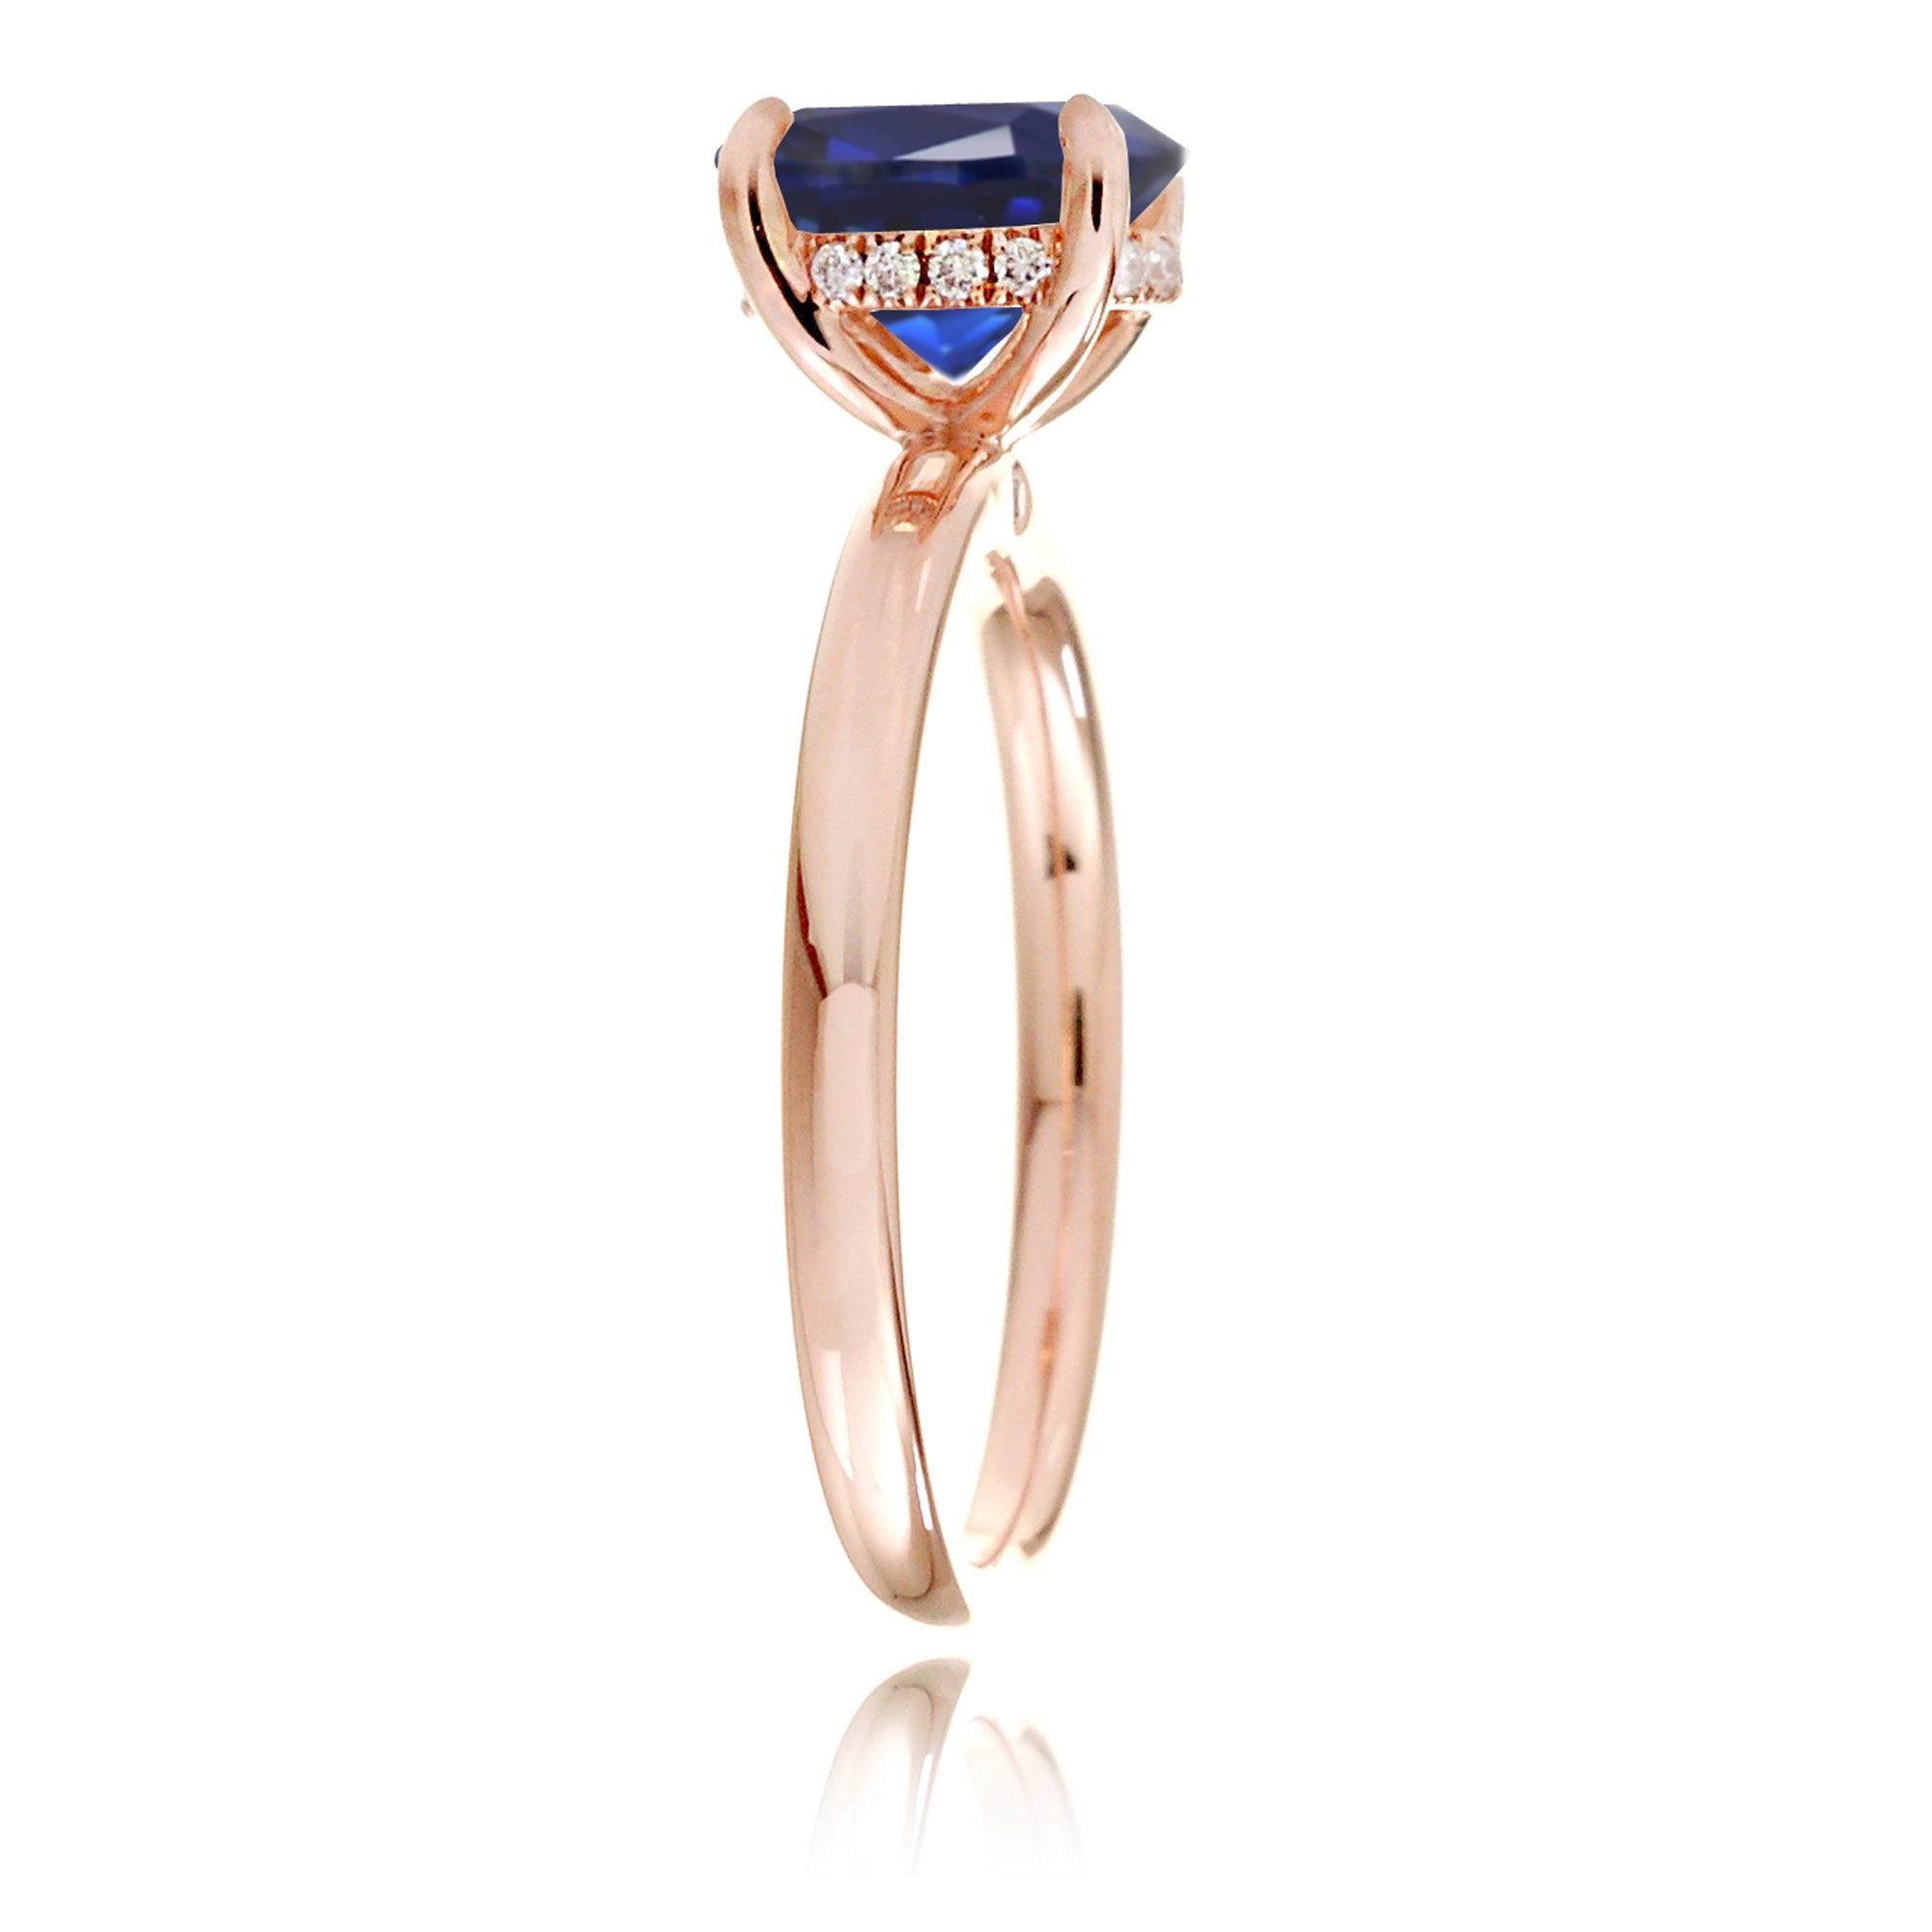 Round cut blue lab-grown sapphire with diamond hidden halo on rose gold